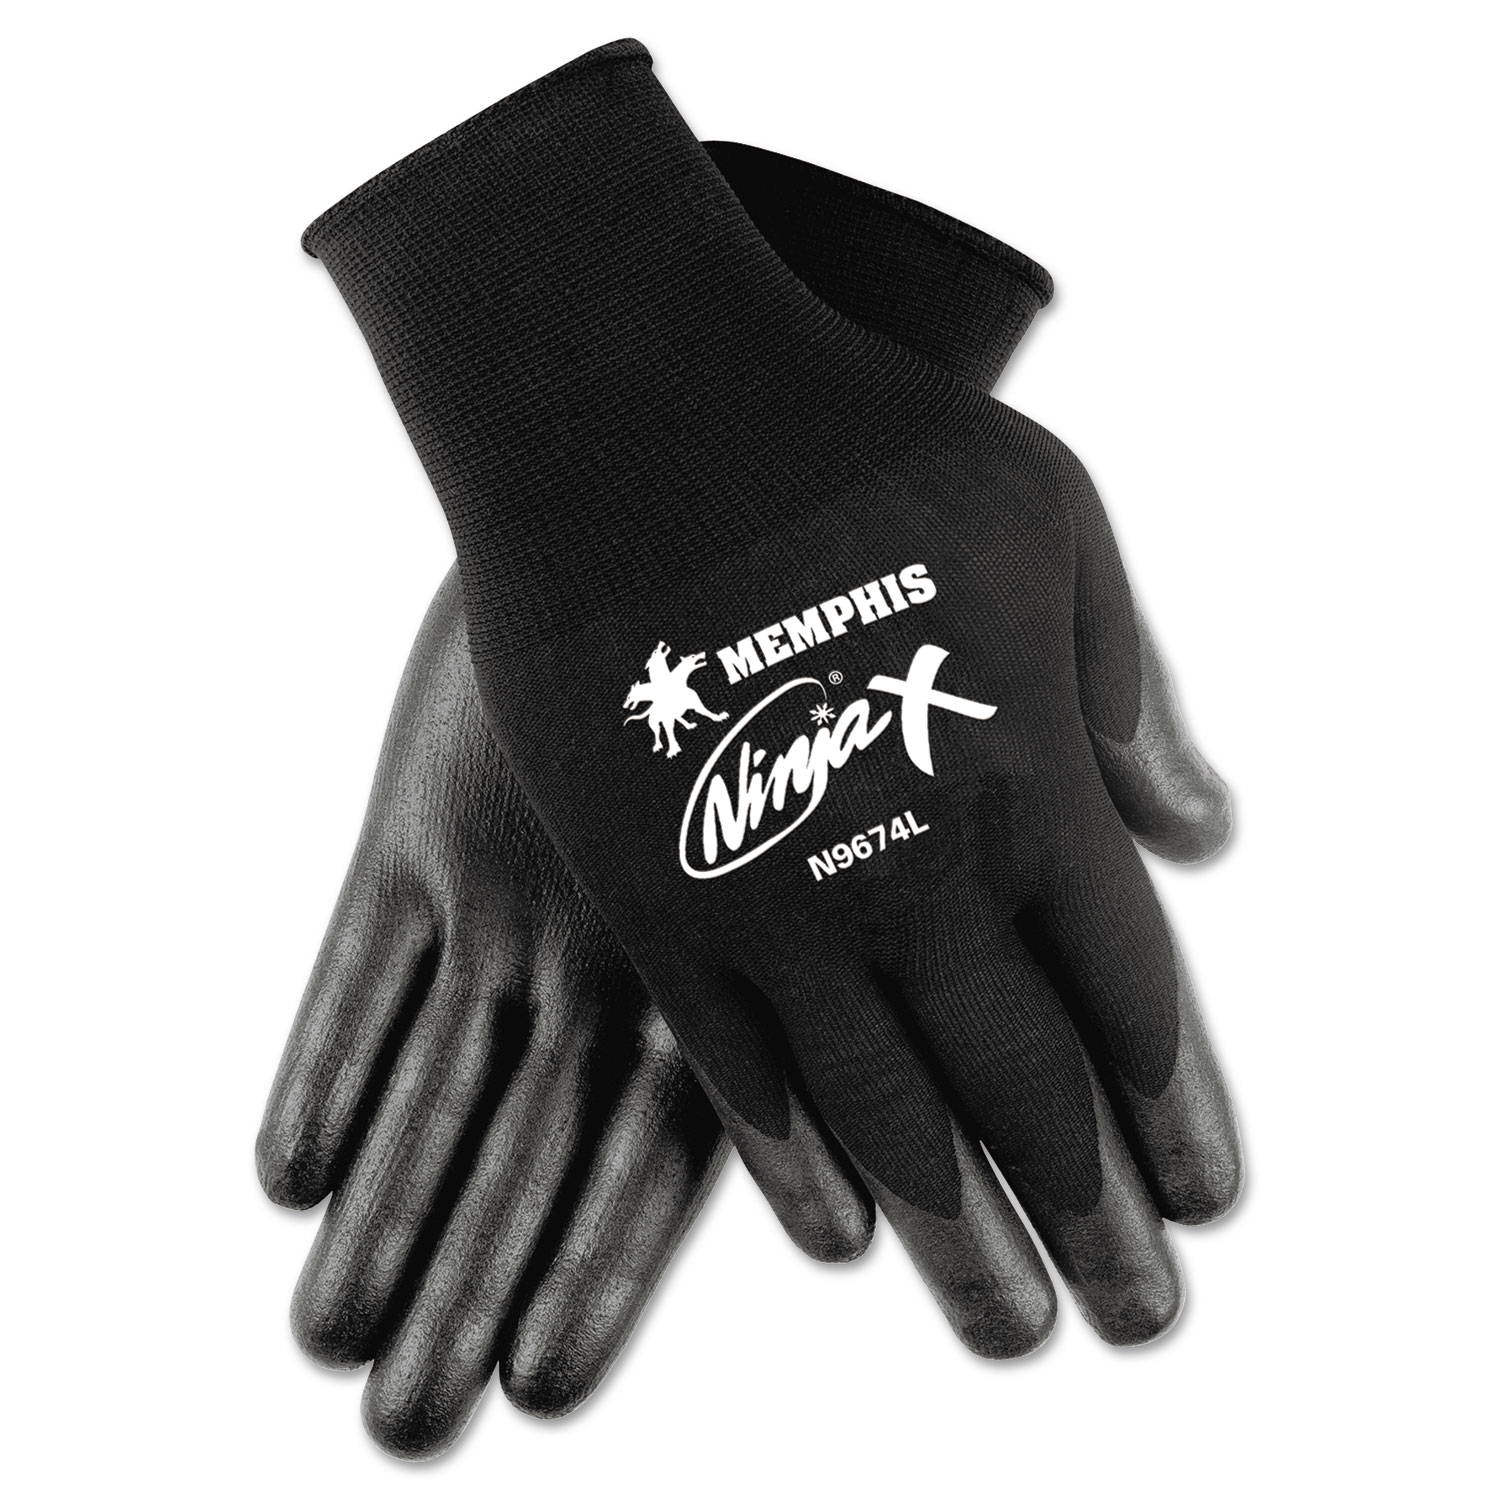  MCR Safety N9674S Ninja x Bi-Polymer Coated Gloves, Small, Black, Pair (CRWN9674S) 